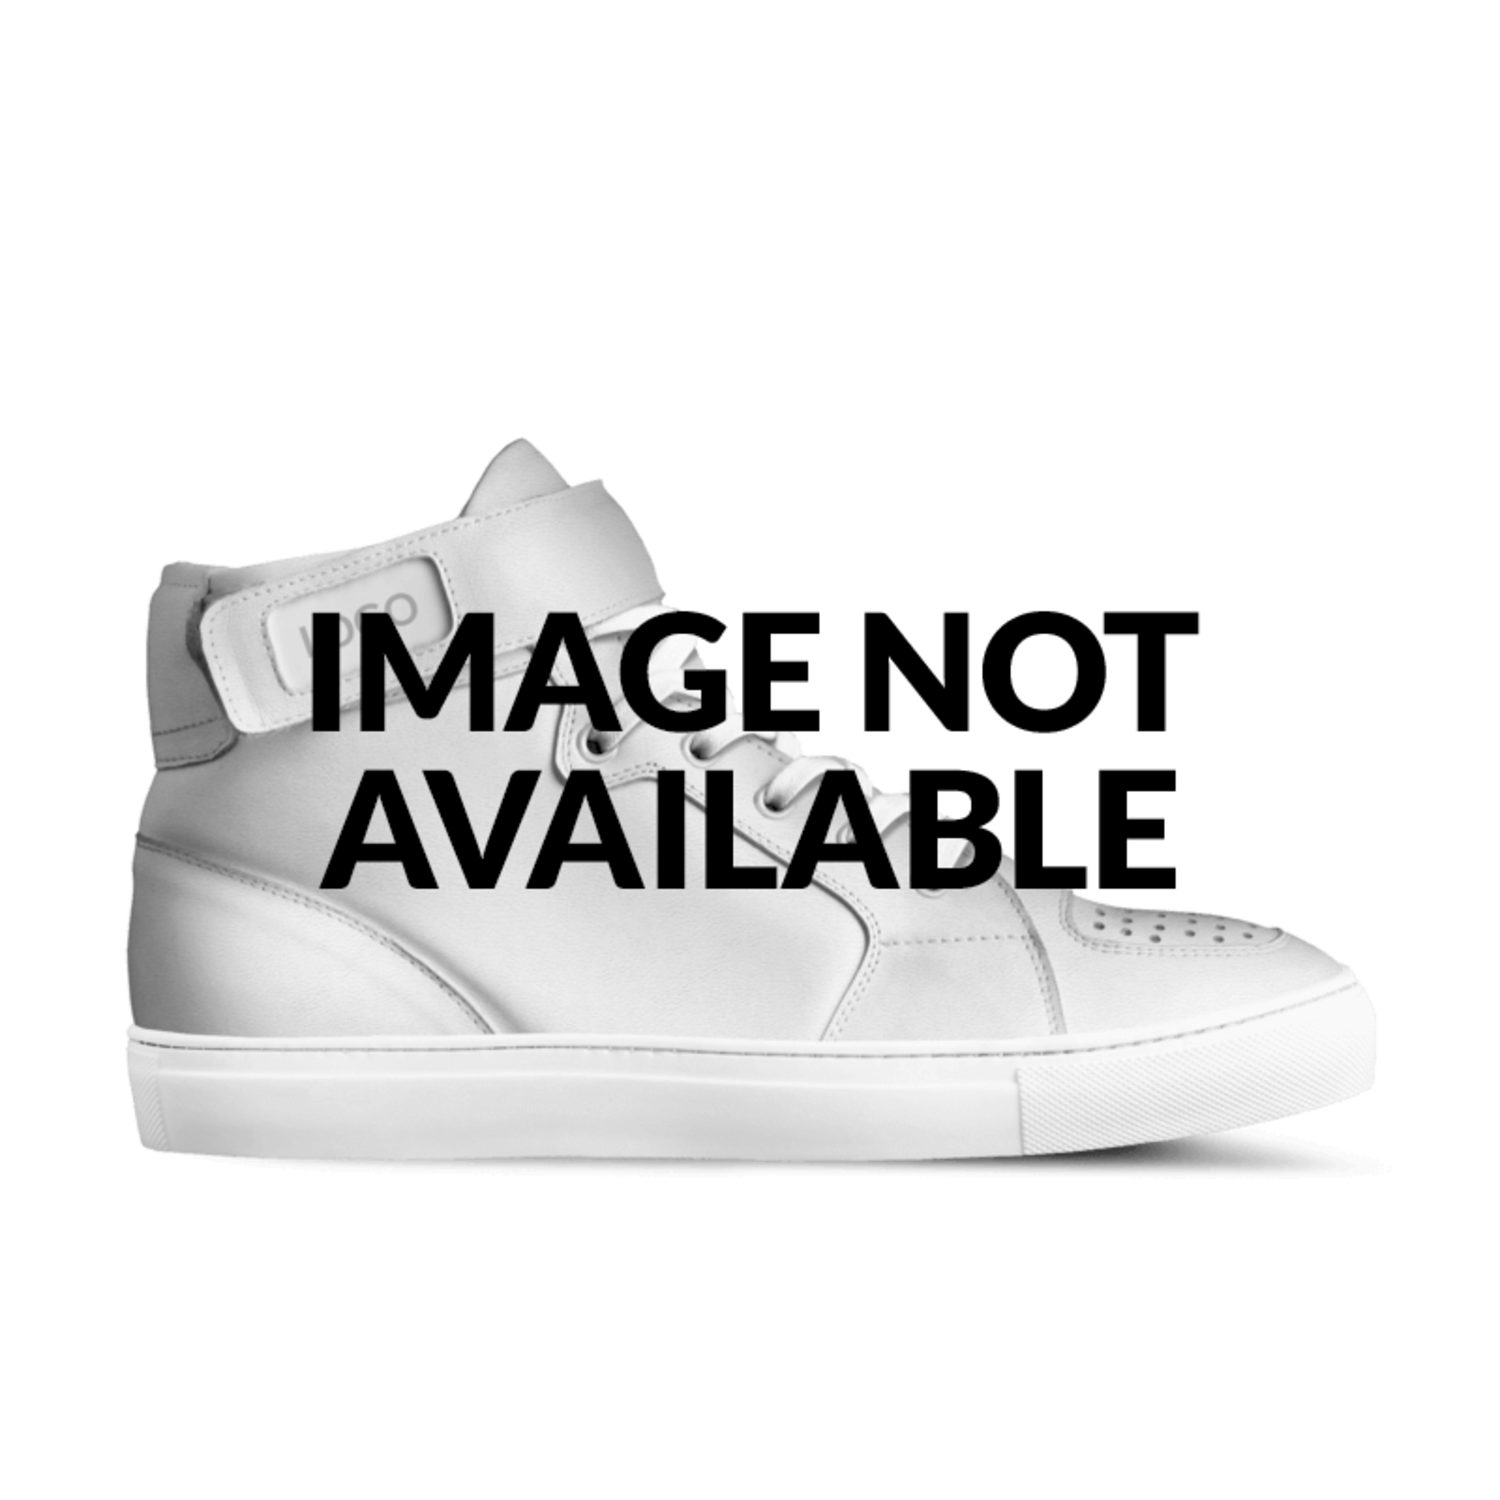 0megaz custom made in Italy shoes by Joseph Estrada | Box view